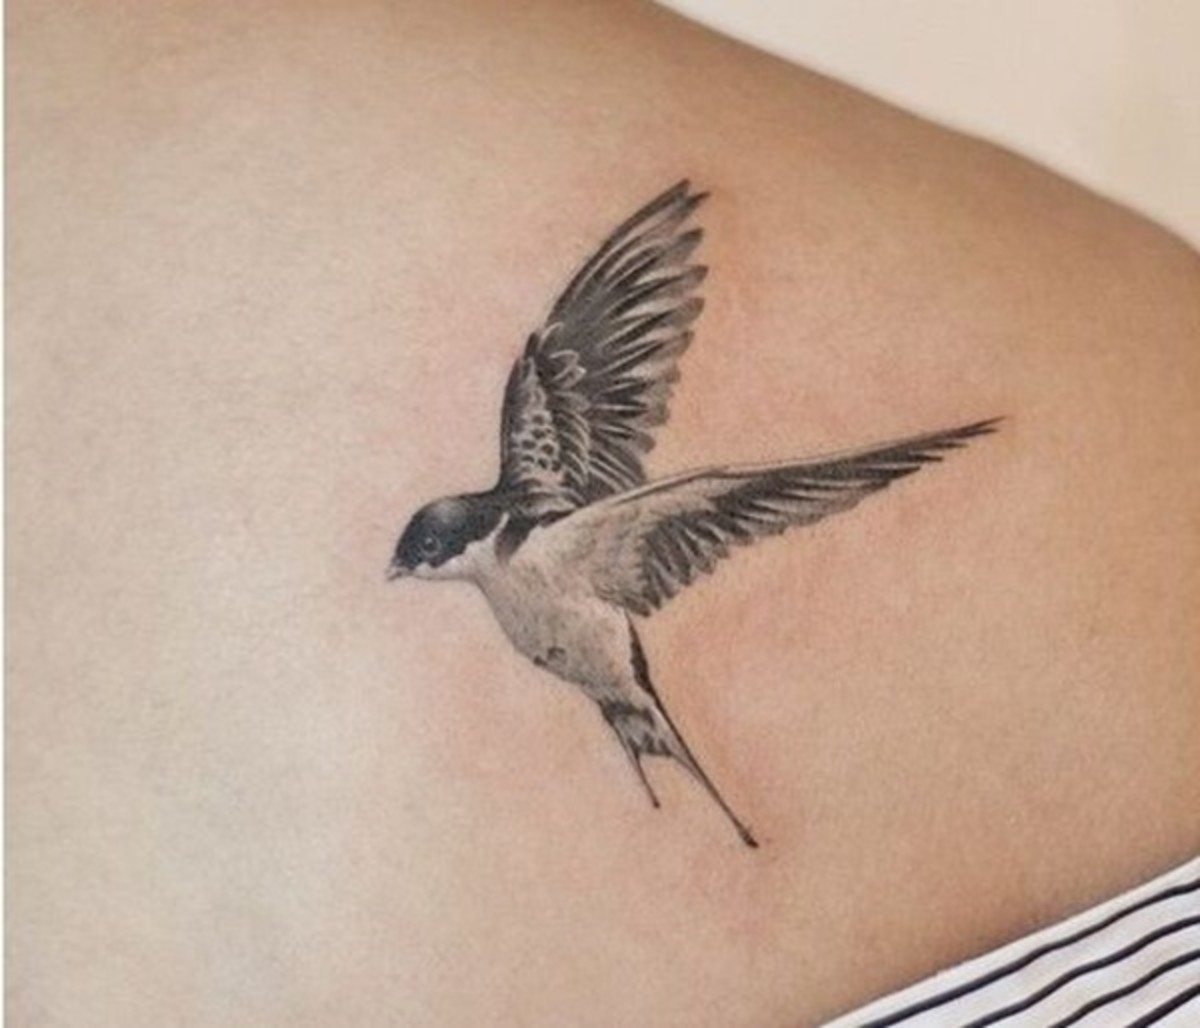 Types of bird tattoos